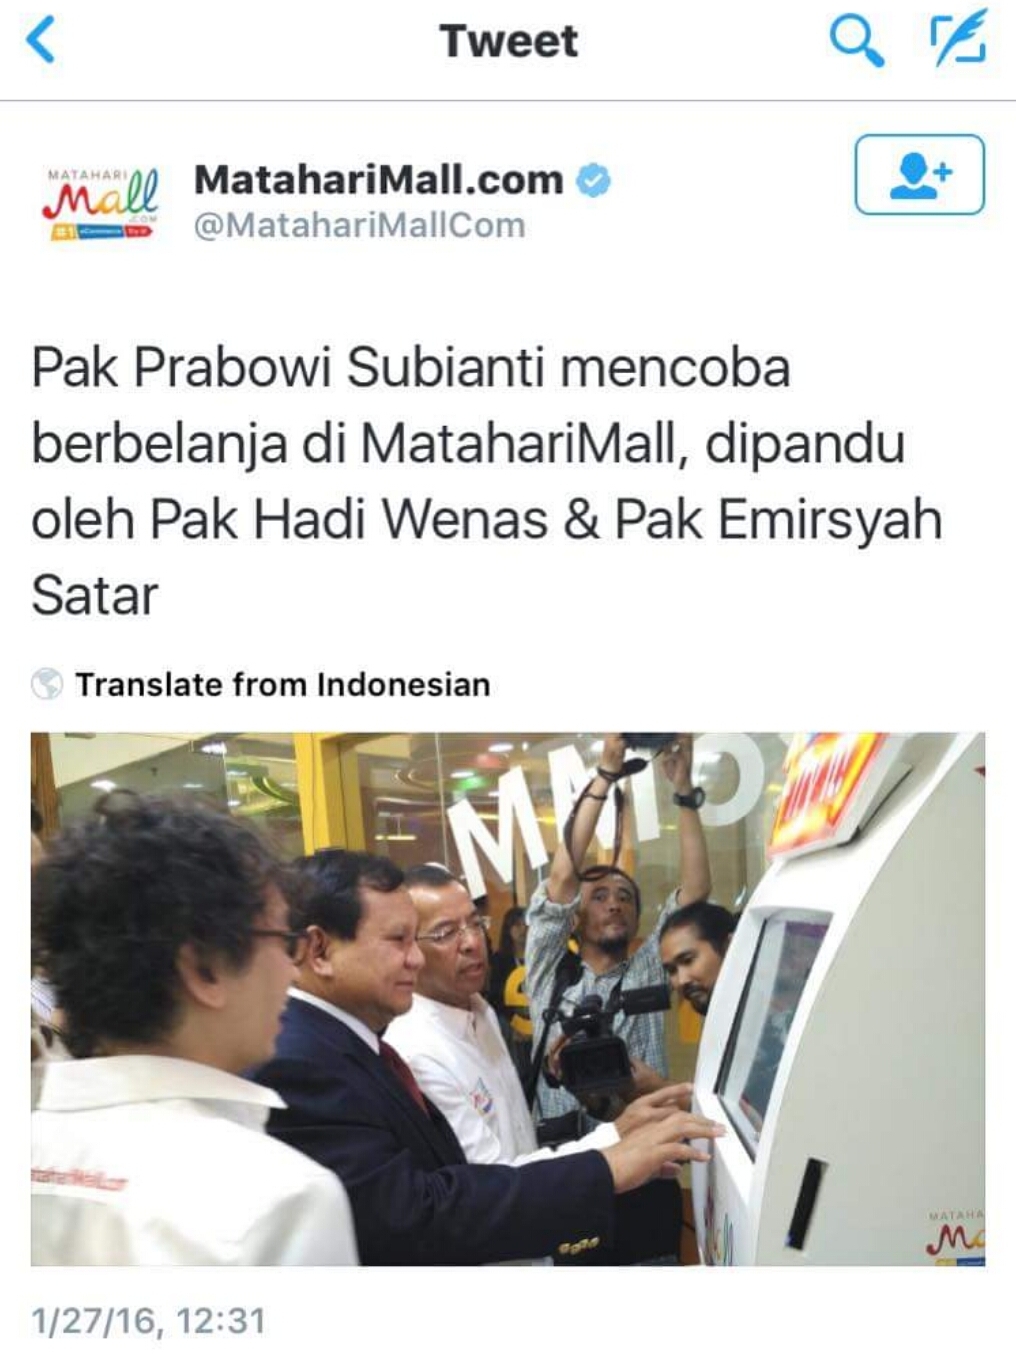 8 Momen kedekatan Jokowi-Prabowo di balik layar debat capres